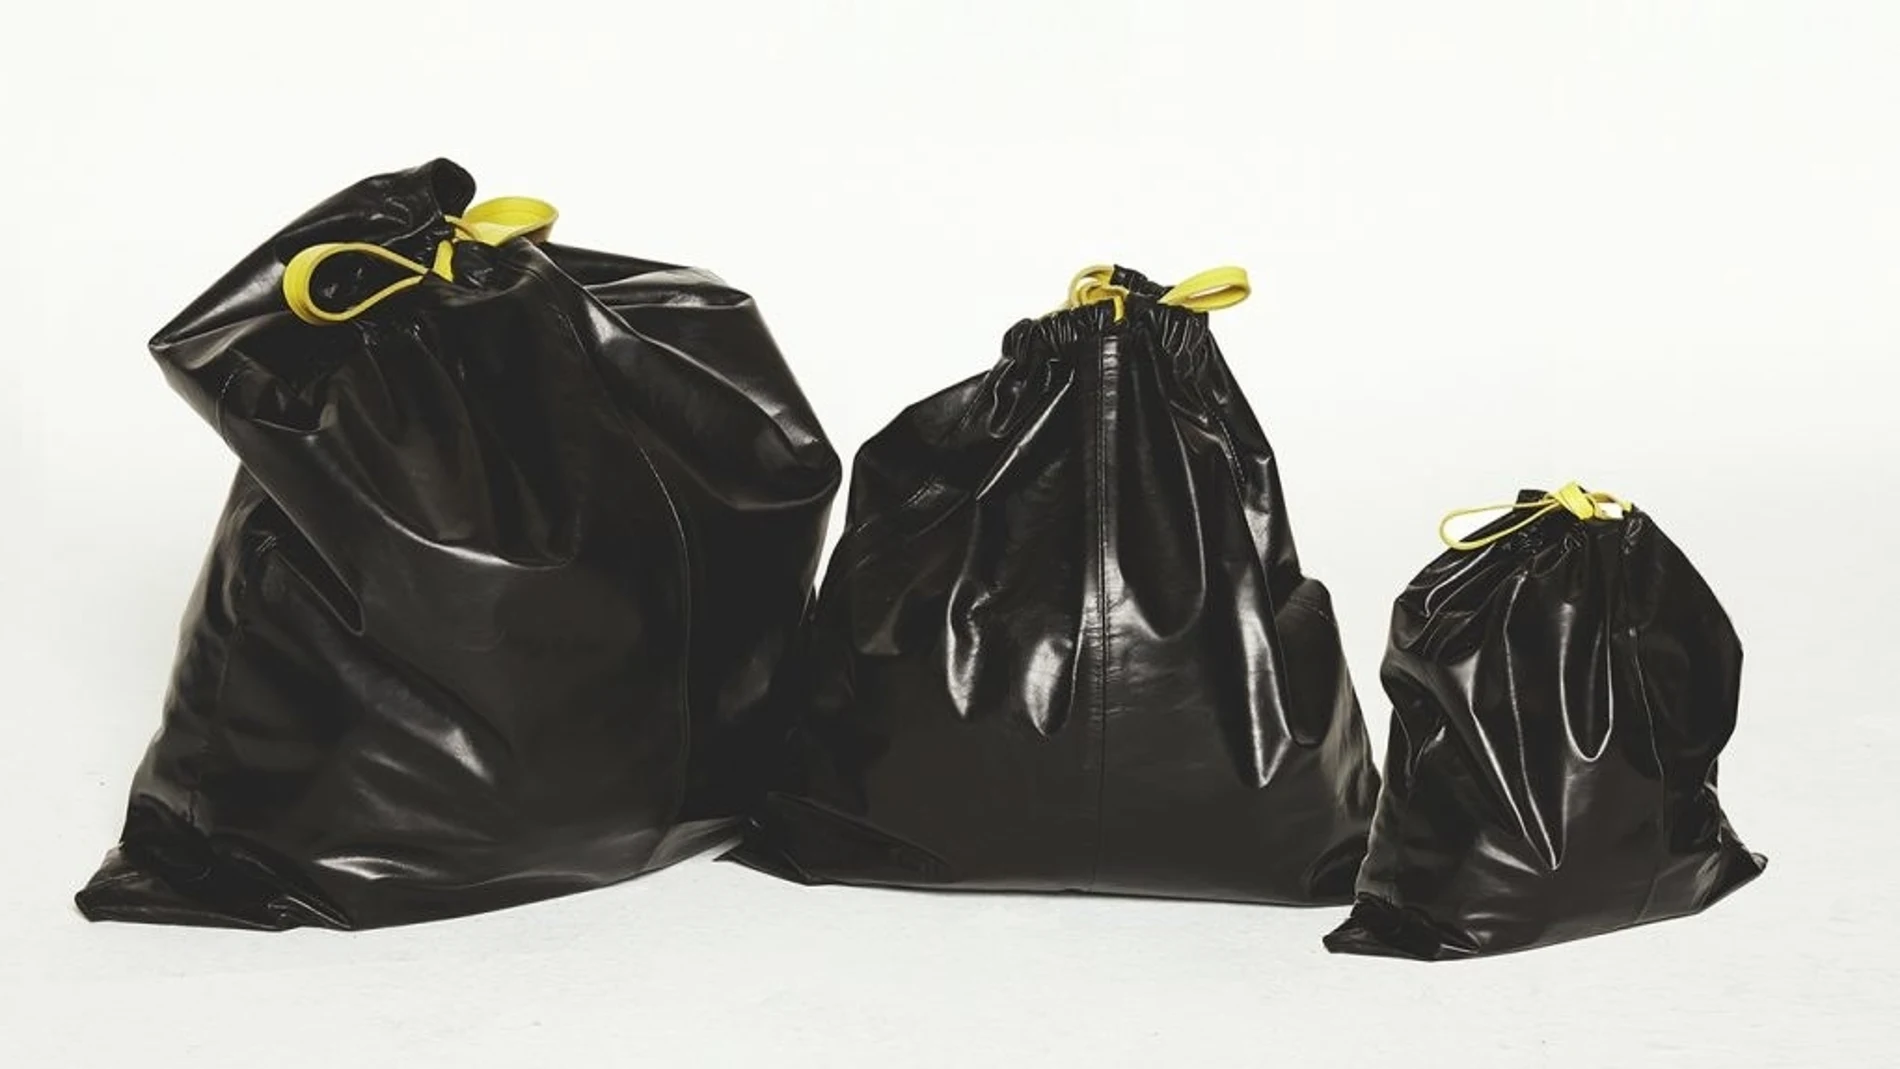 Balenciaga lo vuelve a hacer: la bolsa de basura que vende por